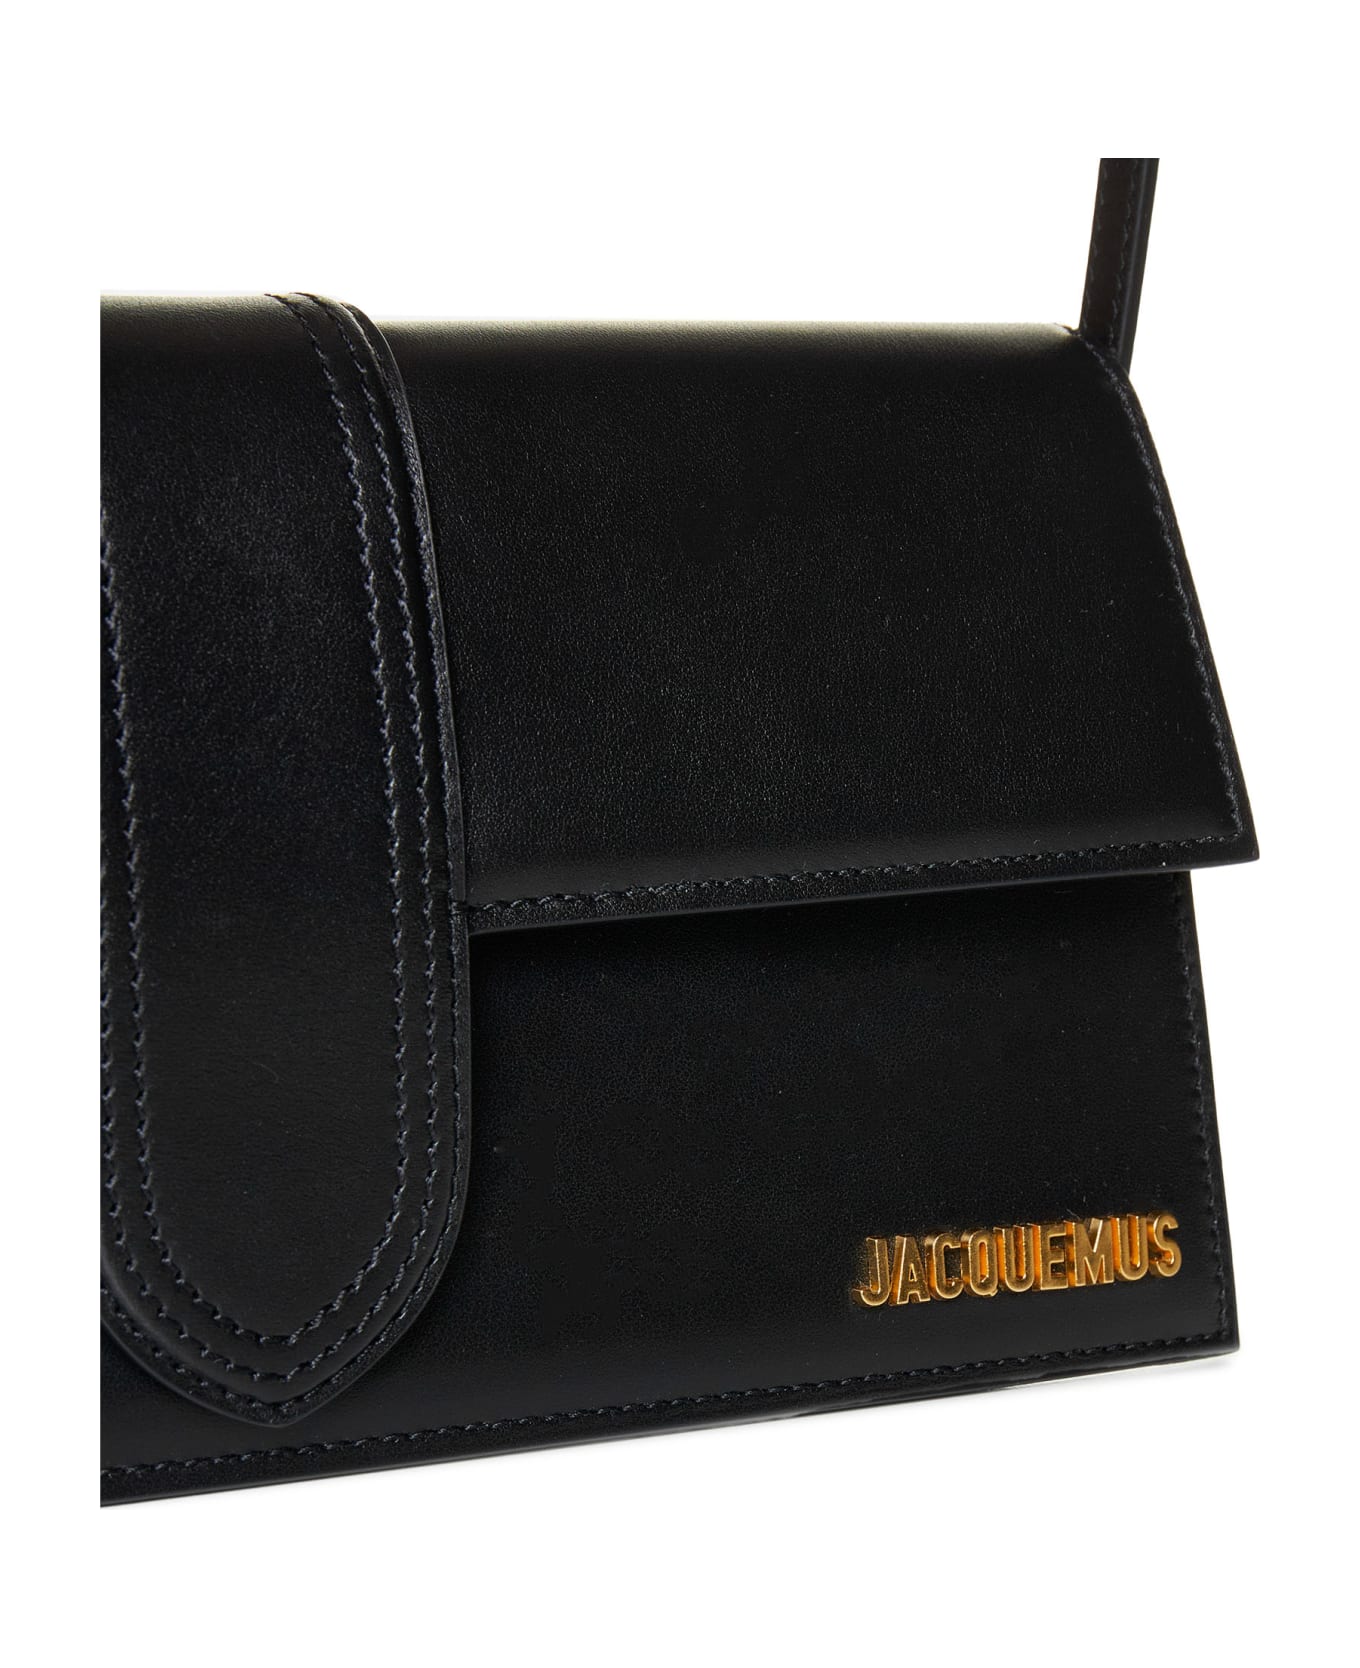 Jacquemus Le Bambino Long Leather Shoulder Bag - Black